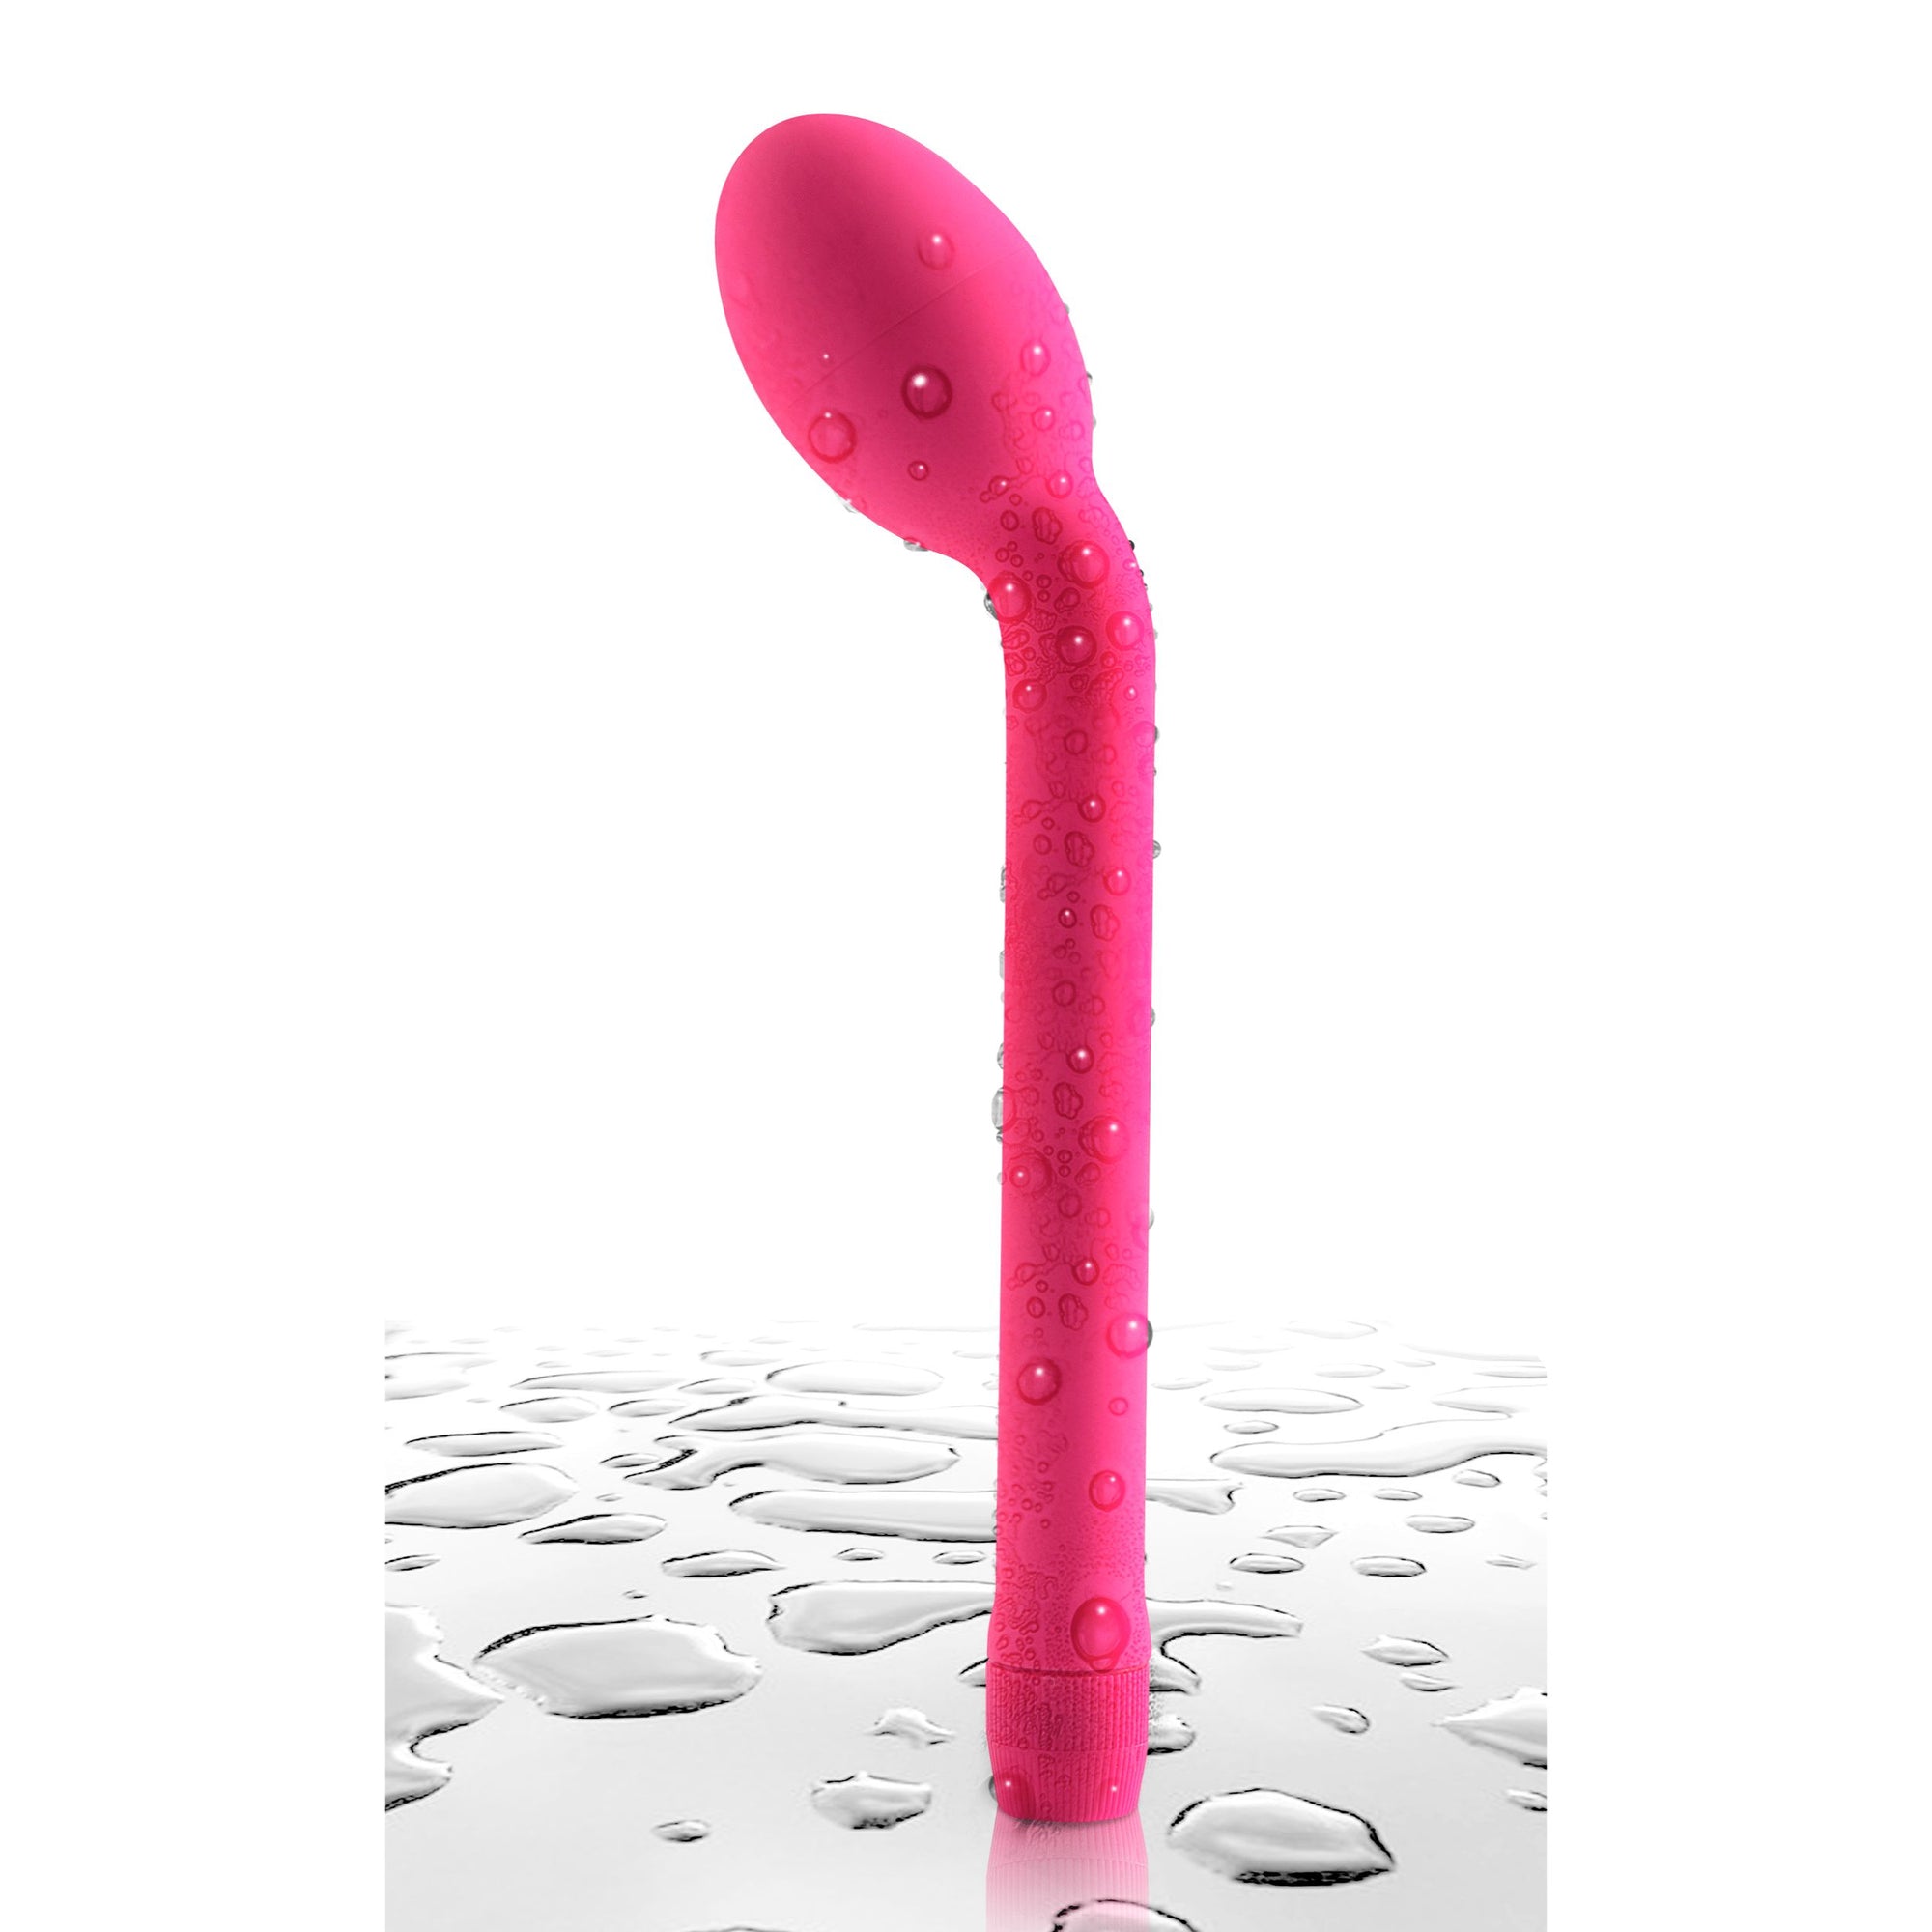 Pipedream - Neon Luv Touch Slender G Spot Vibrator (Pink) -  G Spot Dildo (Vibration) Non Rechargeable  Durio.sg